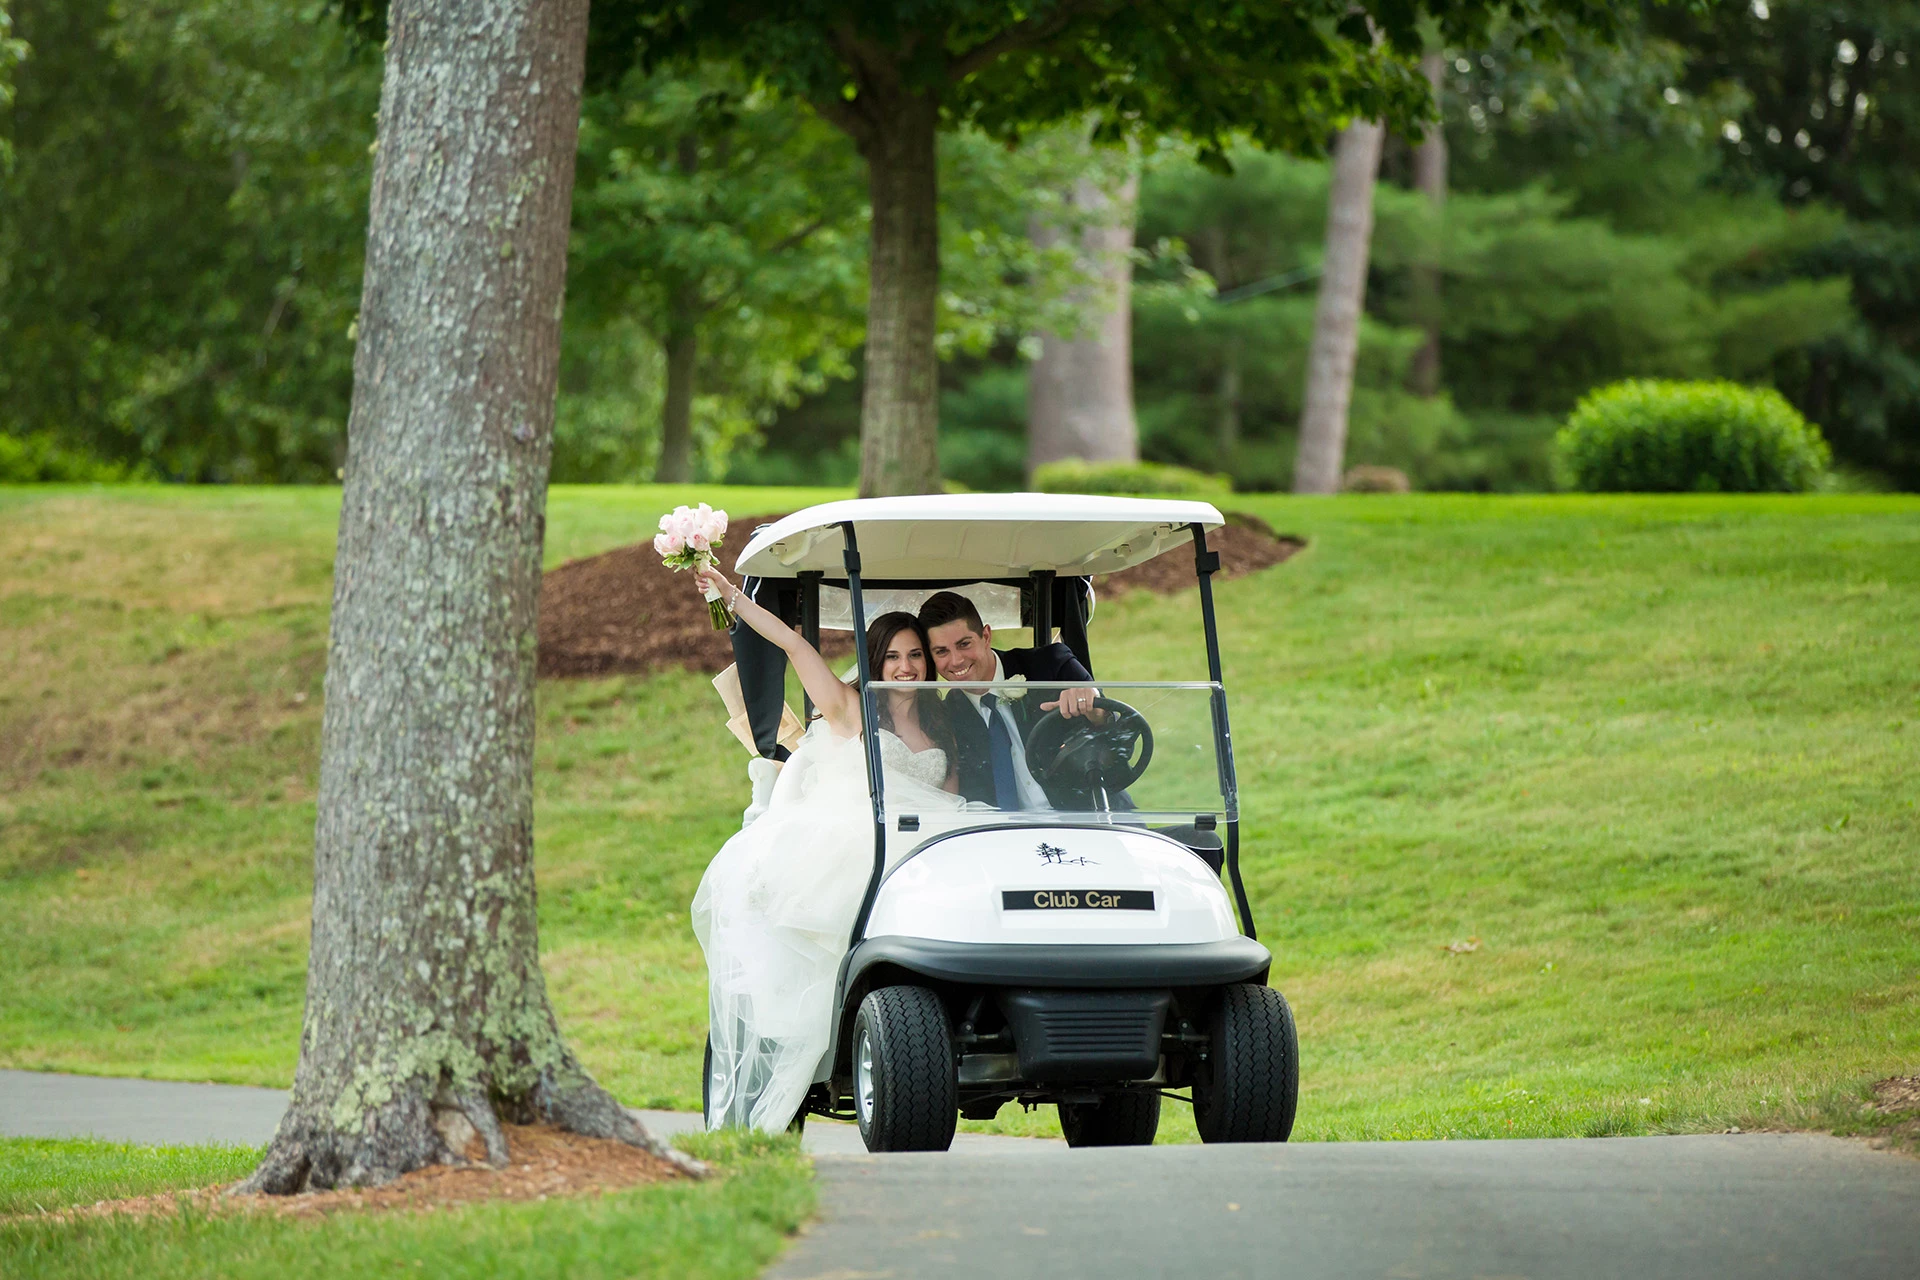 The Ridge Club - Bride and Groom in golf cart